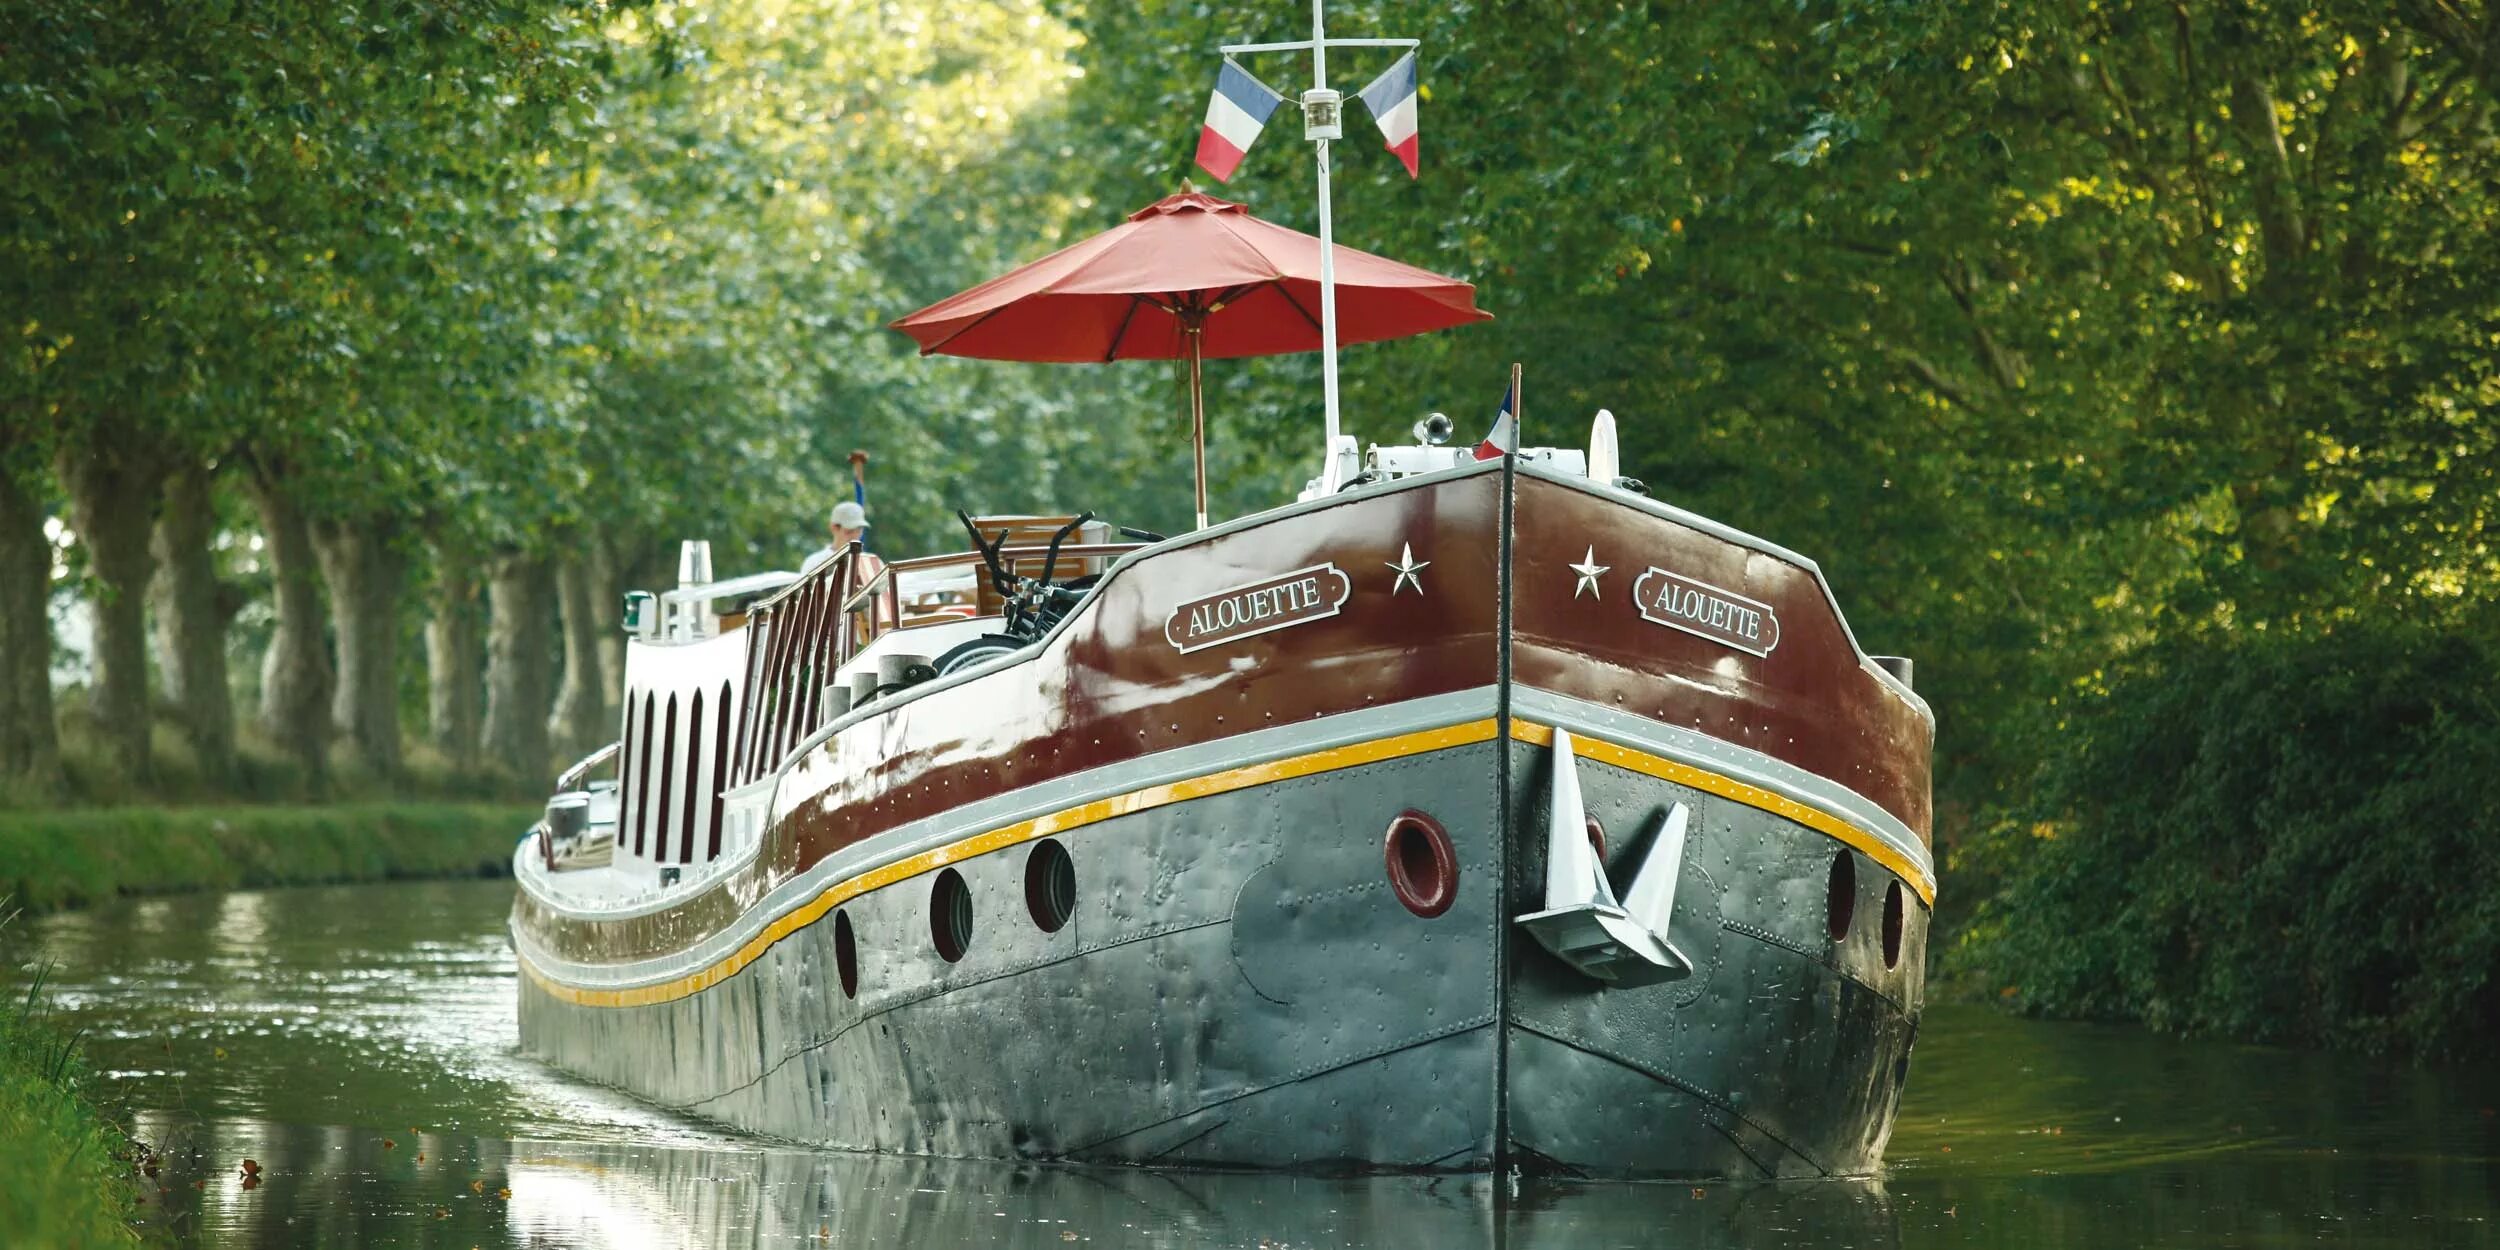 Путешествуем на лодке. Путешествие по каналам Франции на барже. Катер для путешествий по реке. Путешествие на лодке. Лодка для путешествия по каналам.